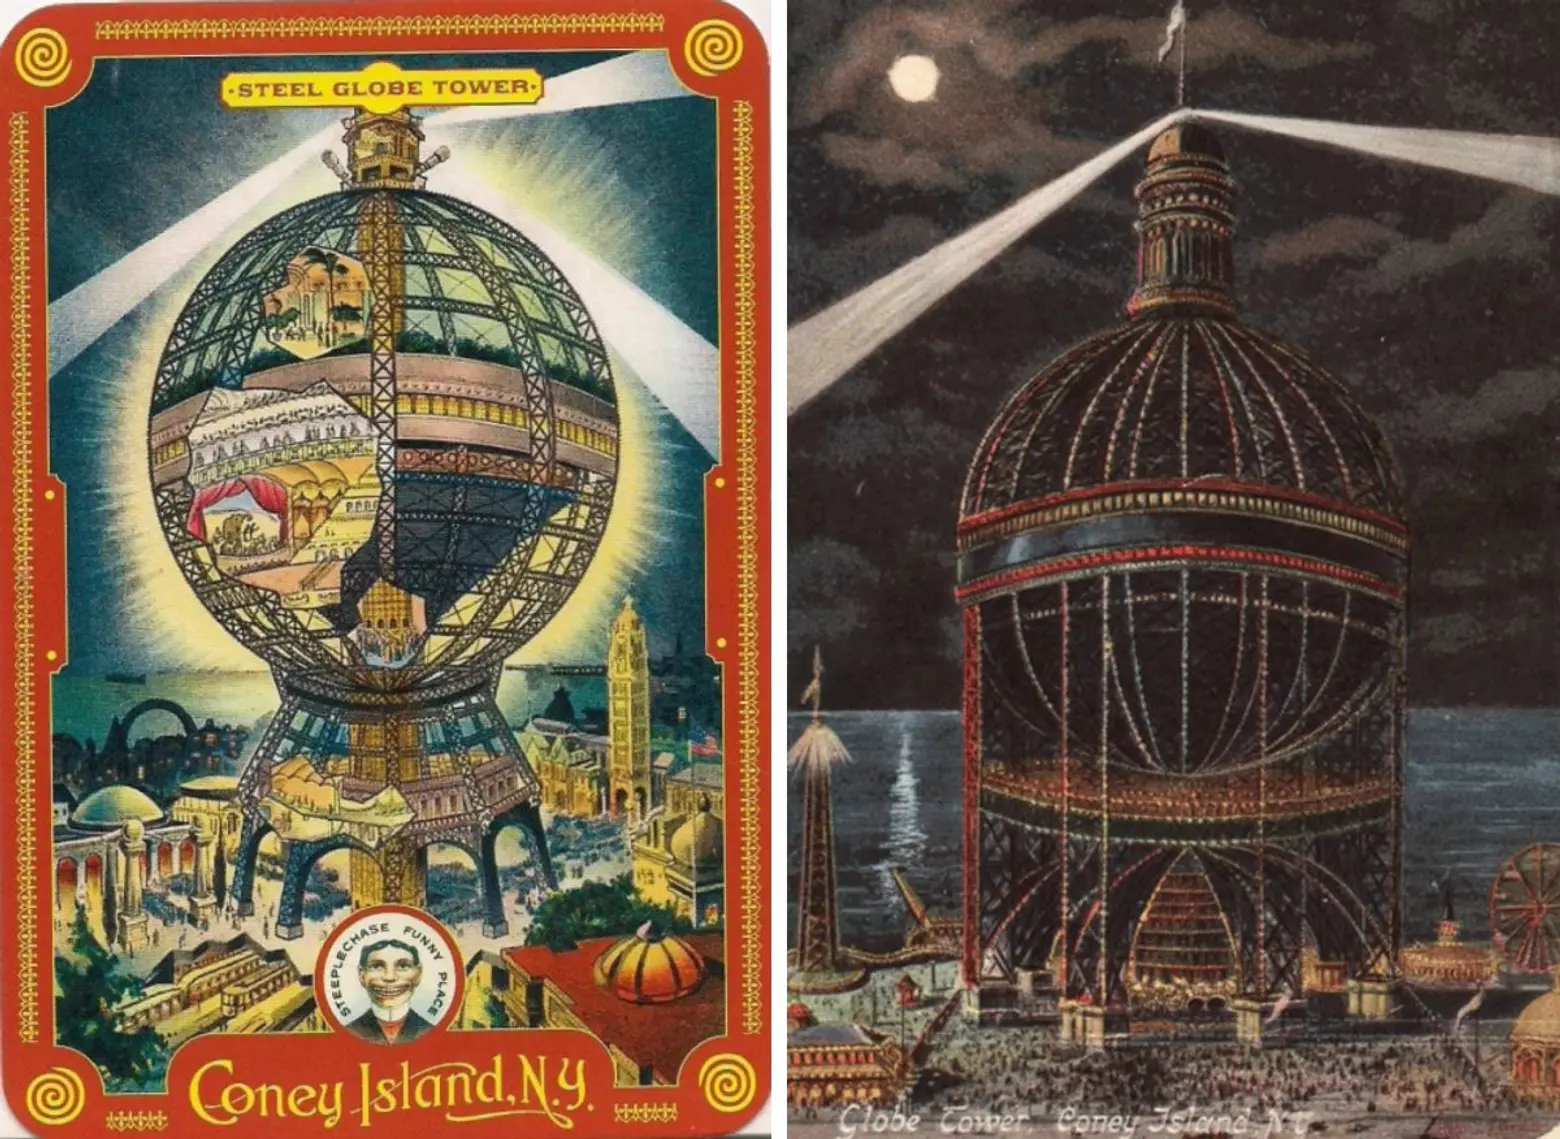 Coney Island Globe Tower, never-built NYC, Coney Island history, Samuel Friede